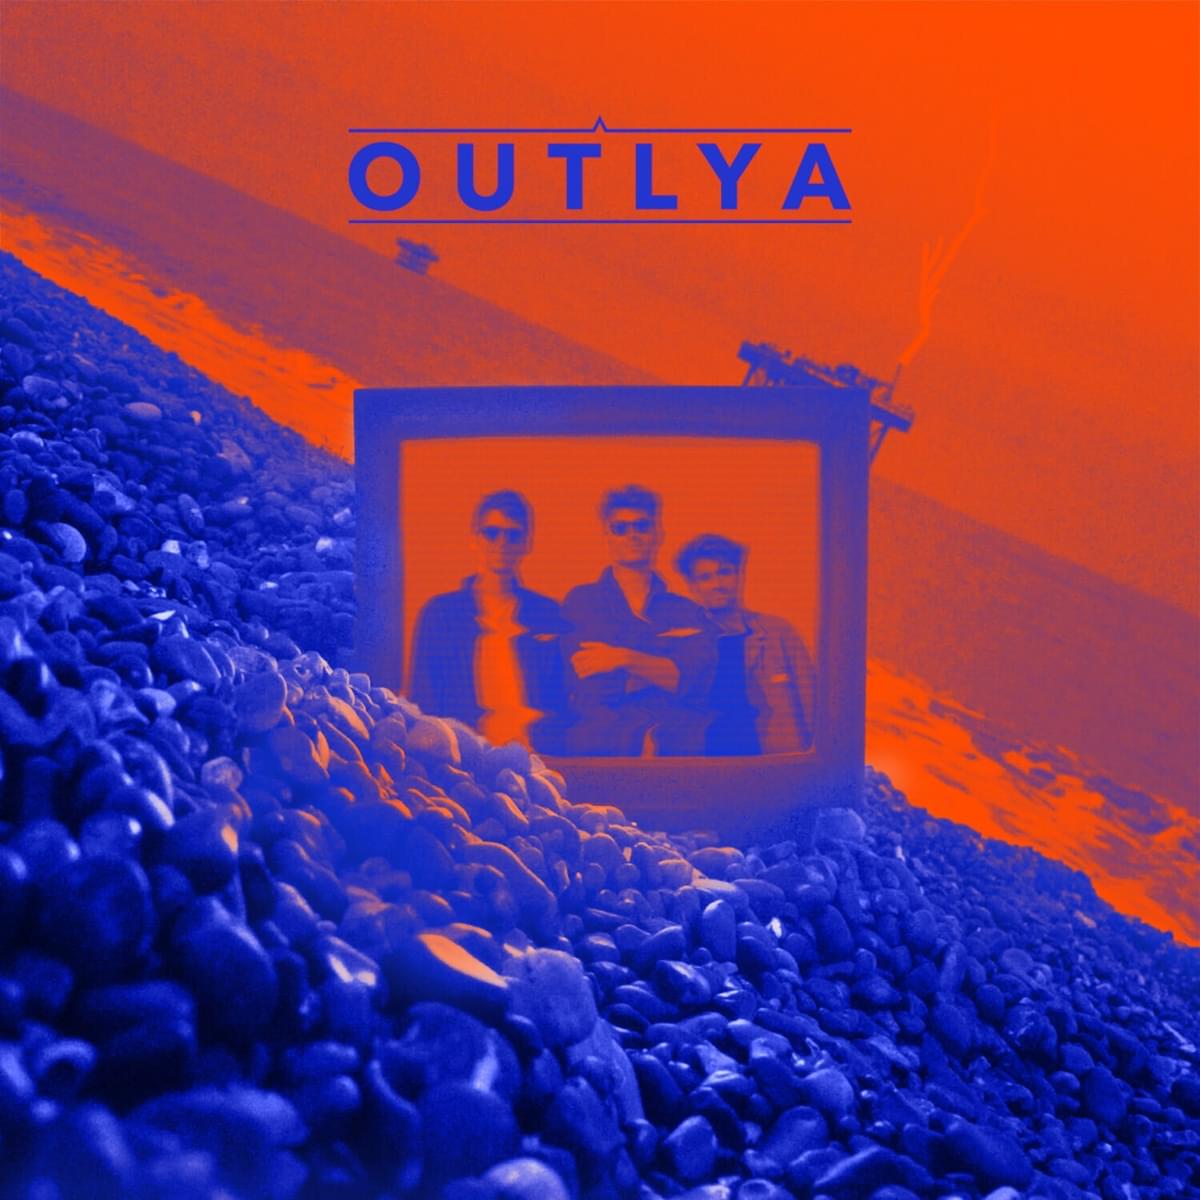 Outlya volcano